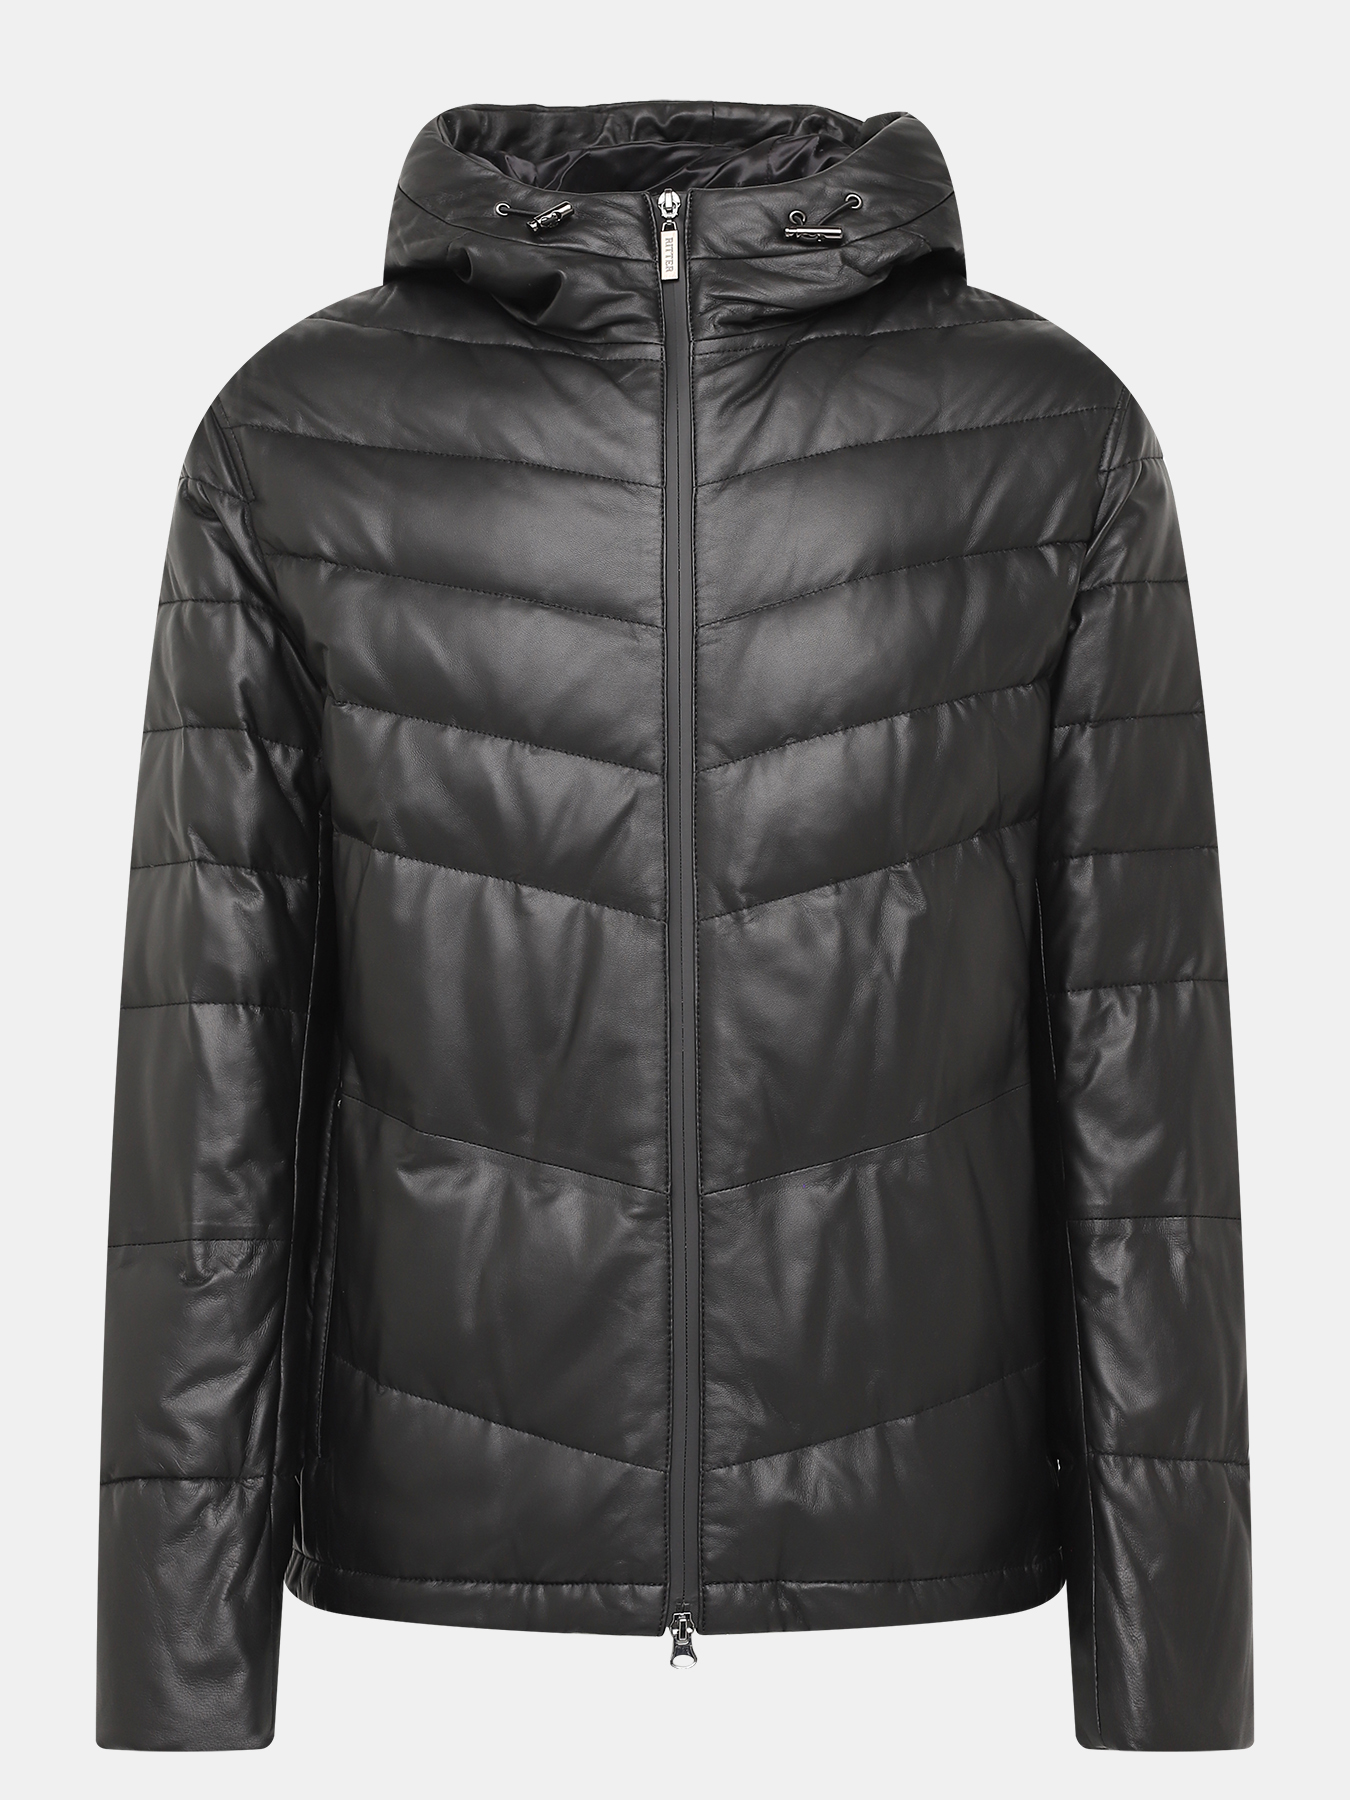 Кожаная куртка Ritter 417699-032, цвет черный, размер 62 - фото 1